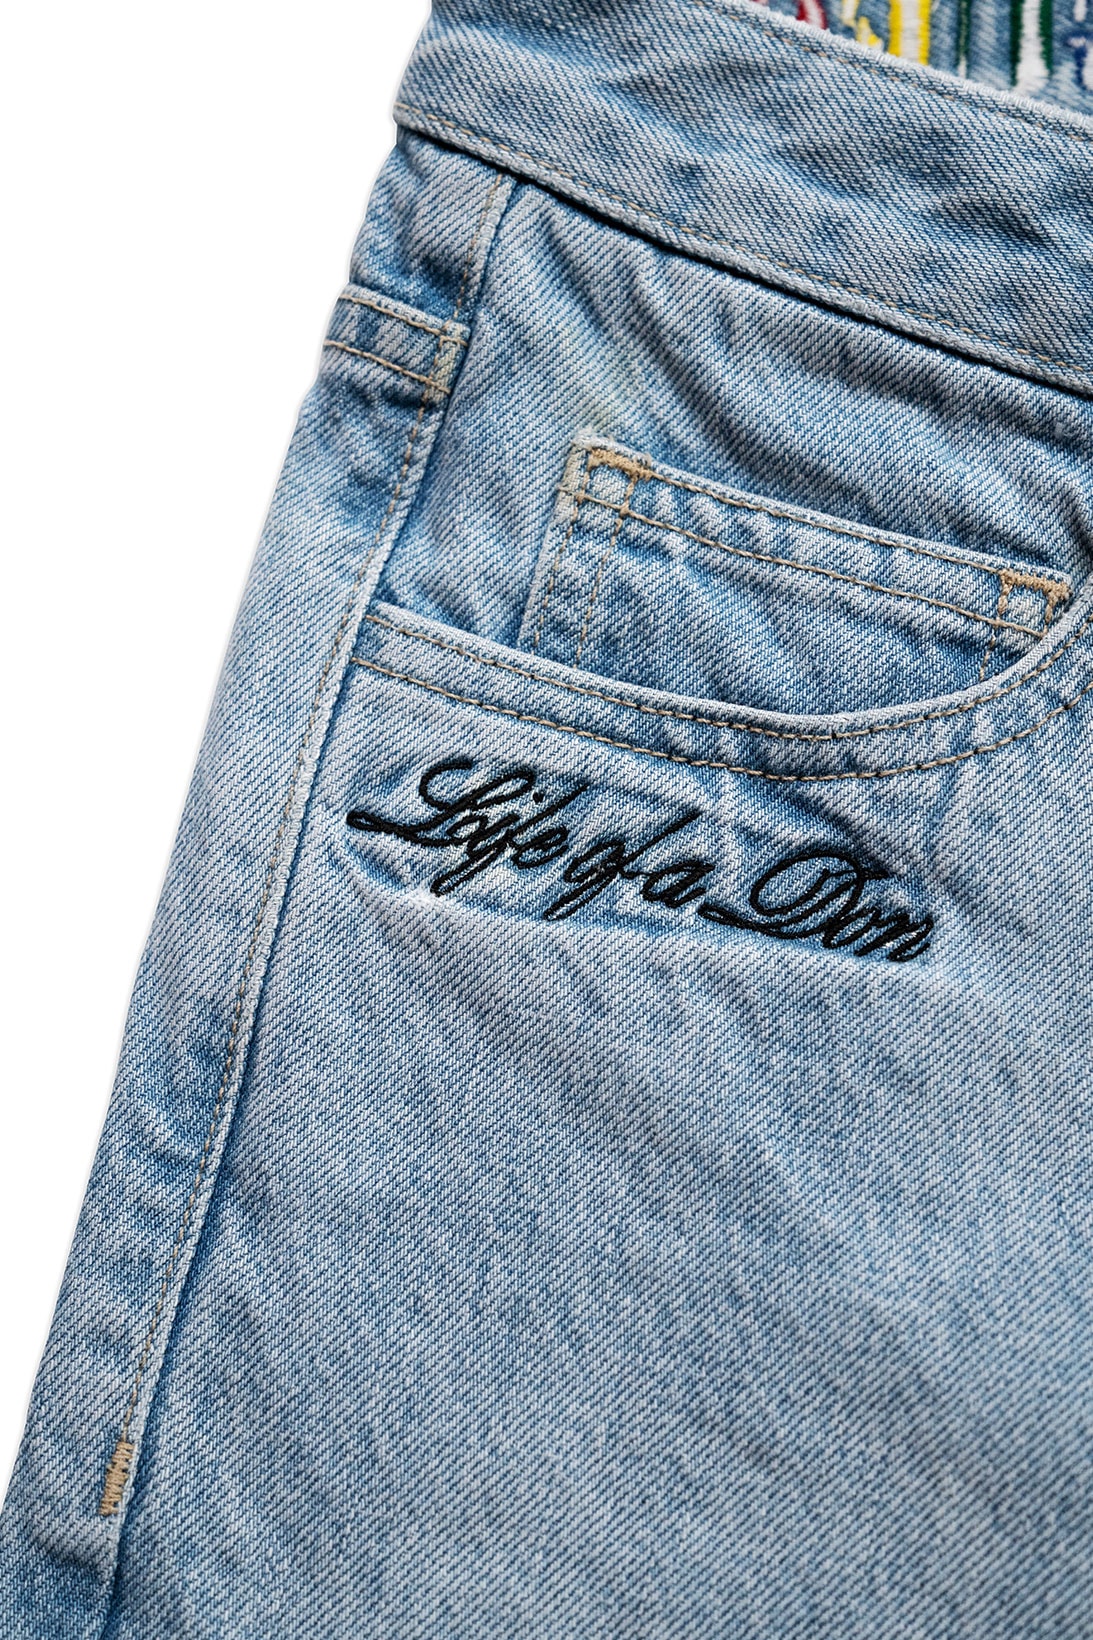 GUESS Originals Don Toliver Life of a Album Merch Jeans Denim Pocket Detail